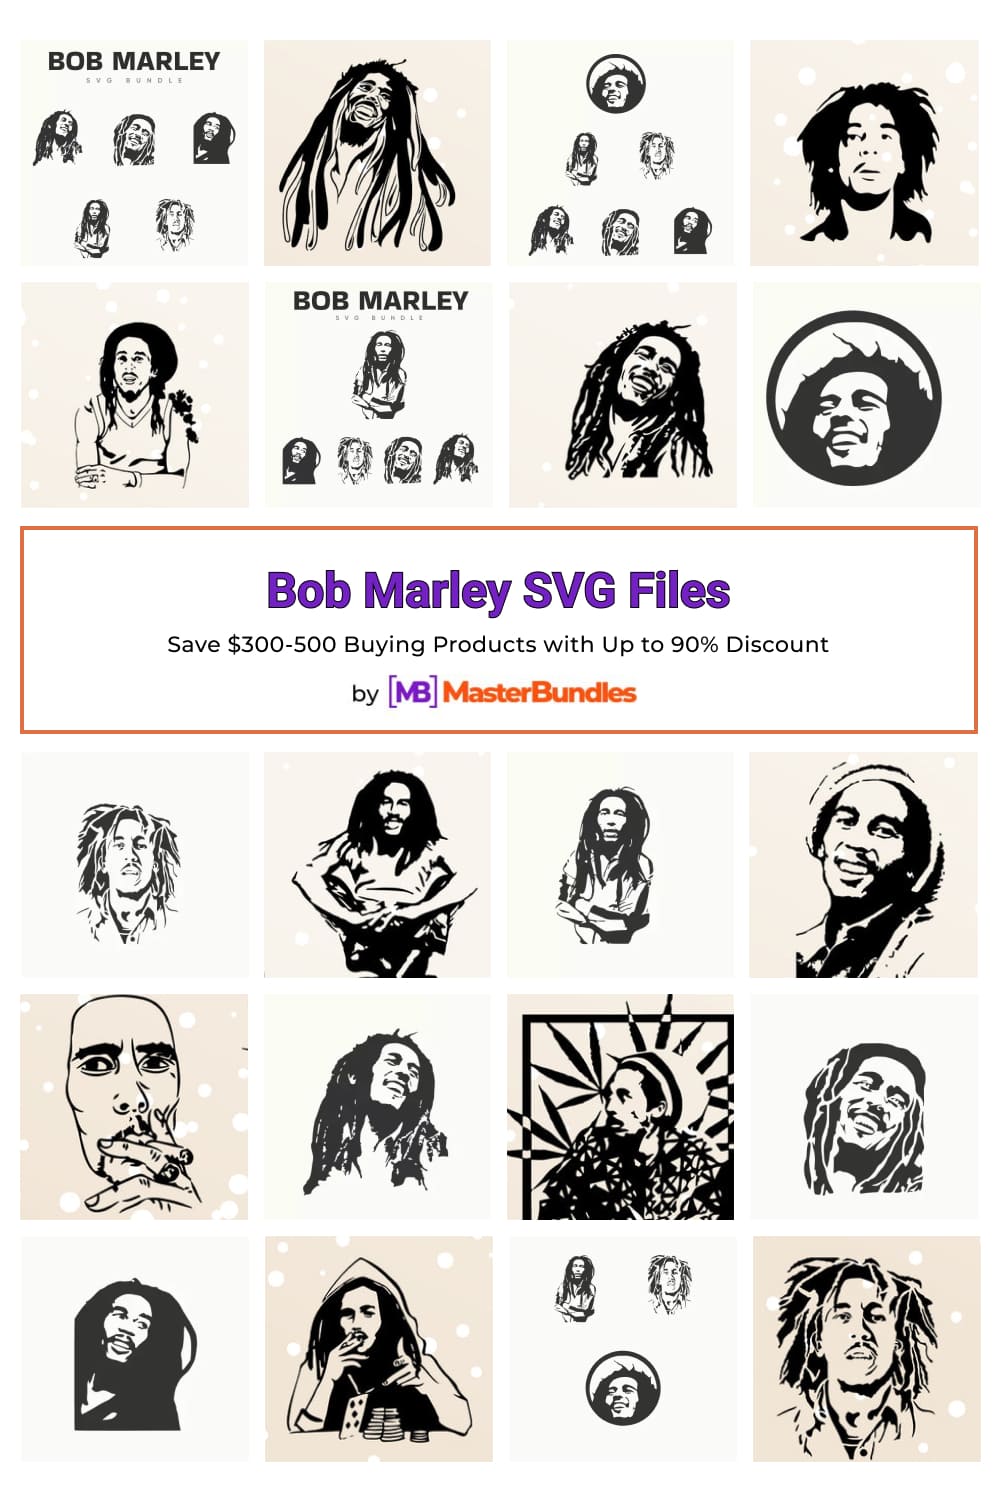 Bob Marley SVG Files Pinterest image.